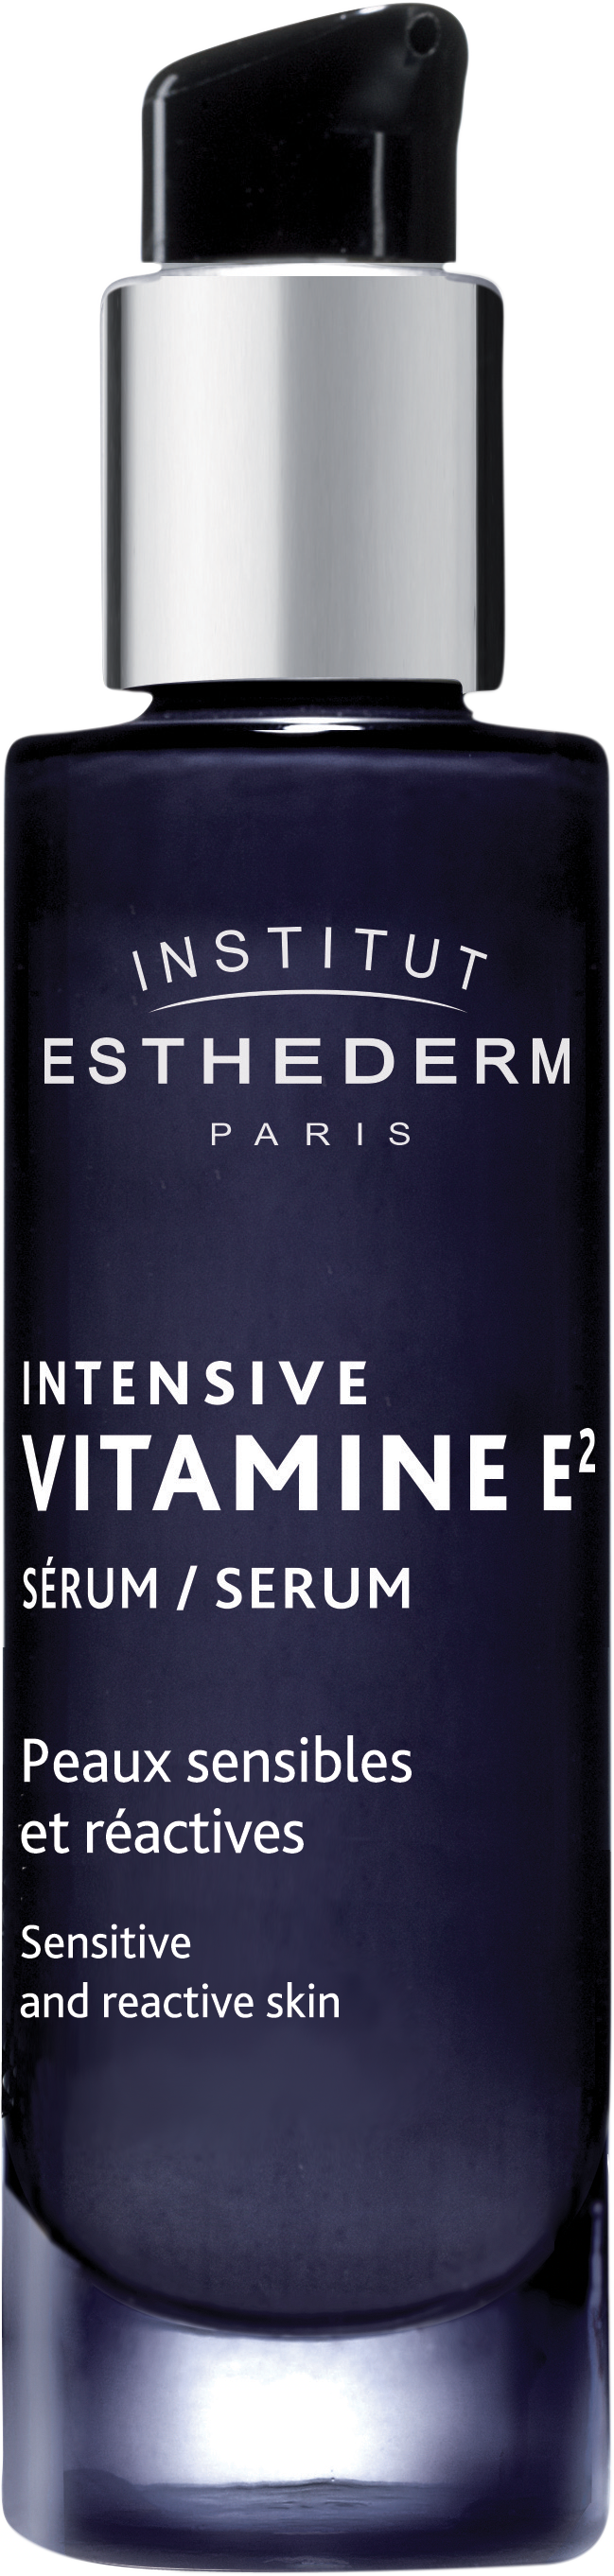 Intensive Vitamine E - Sérum